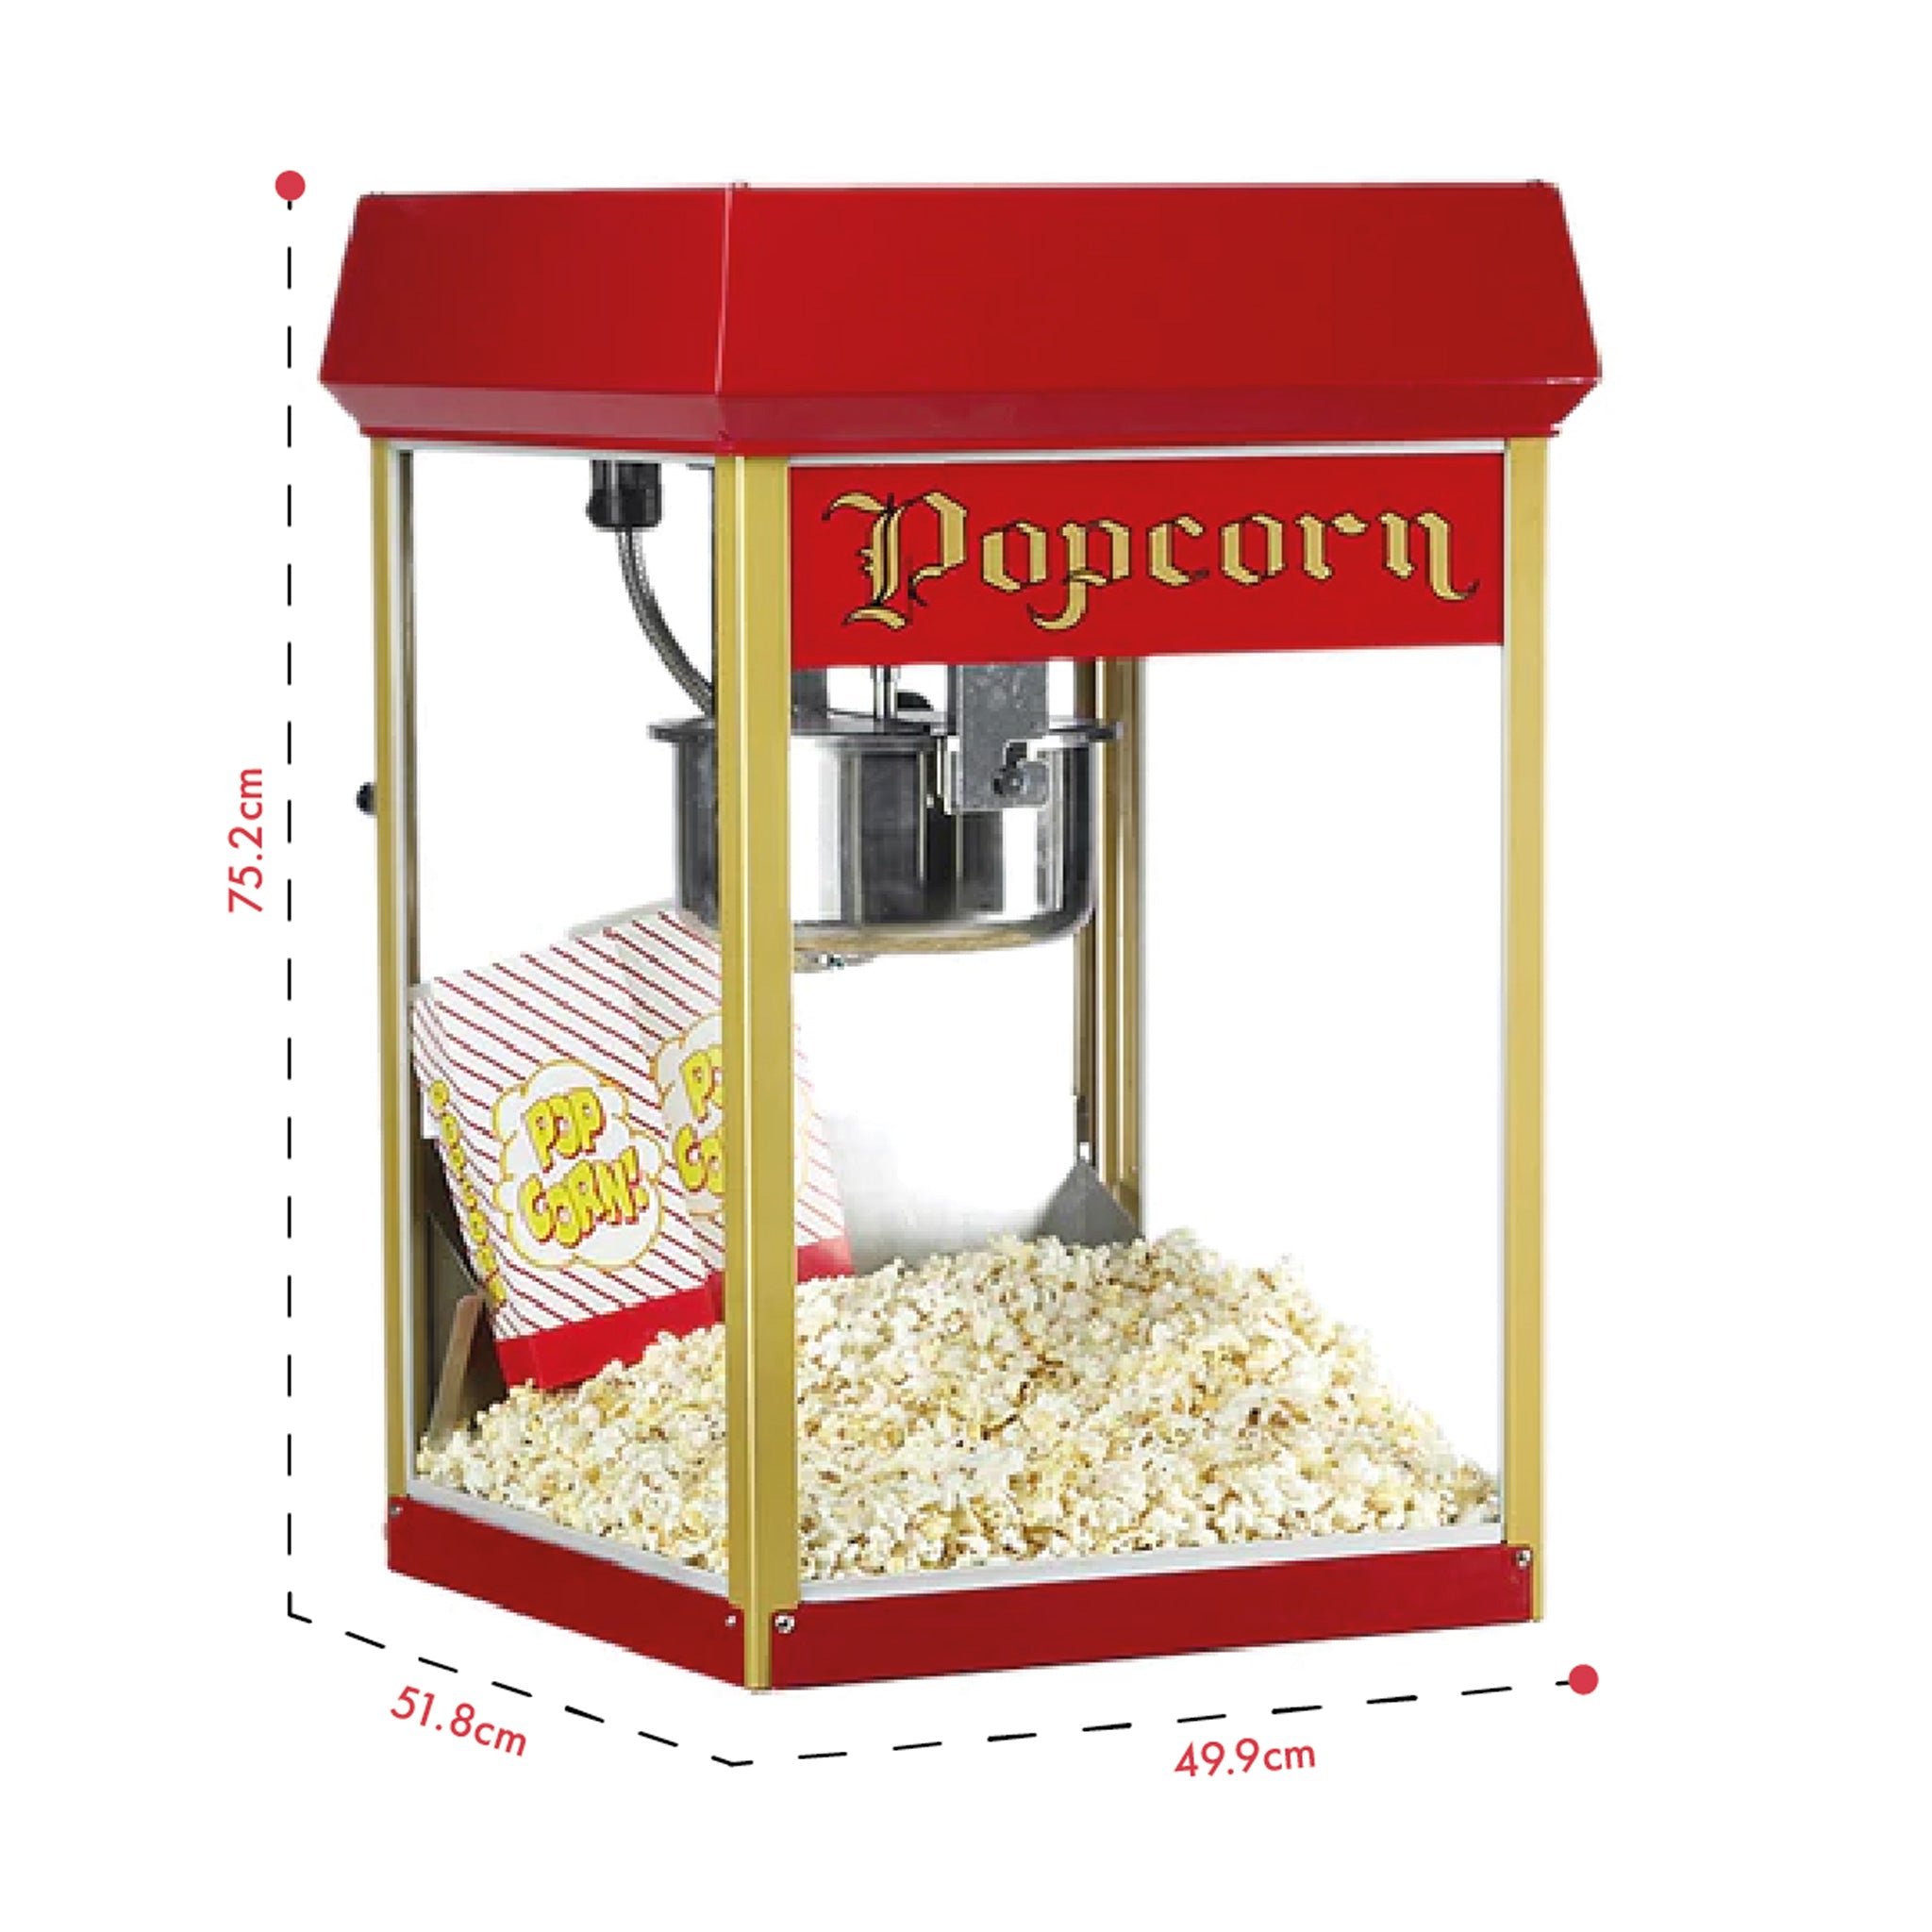 8oz Red Fun Pop Popcorn Machine Gold Medal